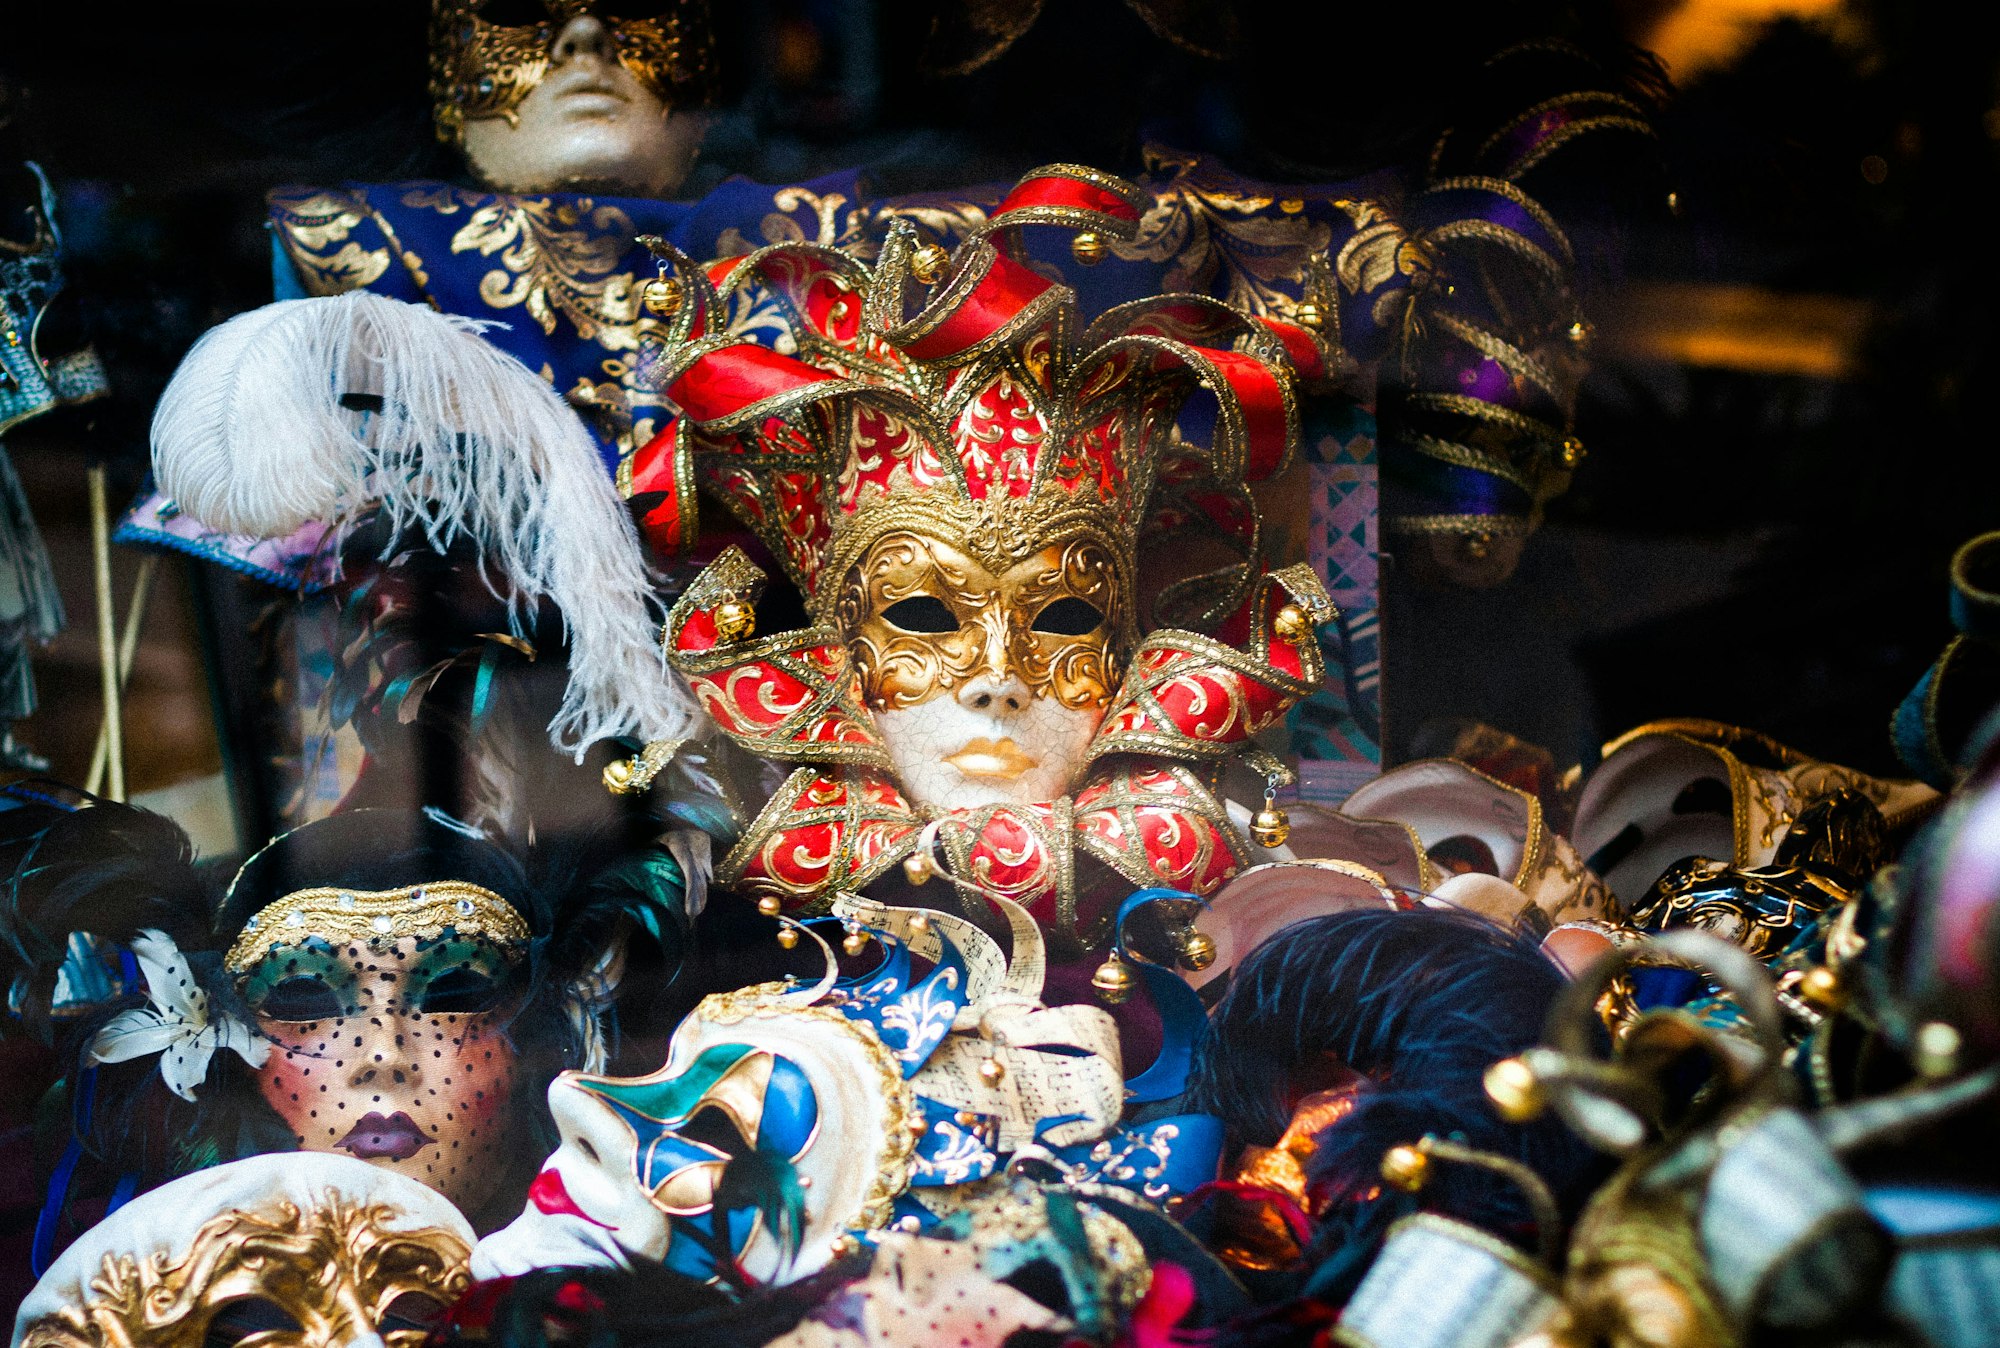 Hotel Transylvania Mavis Vampire Masquerade Cosplay Costume For Sale